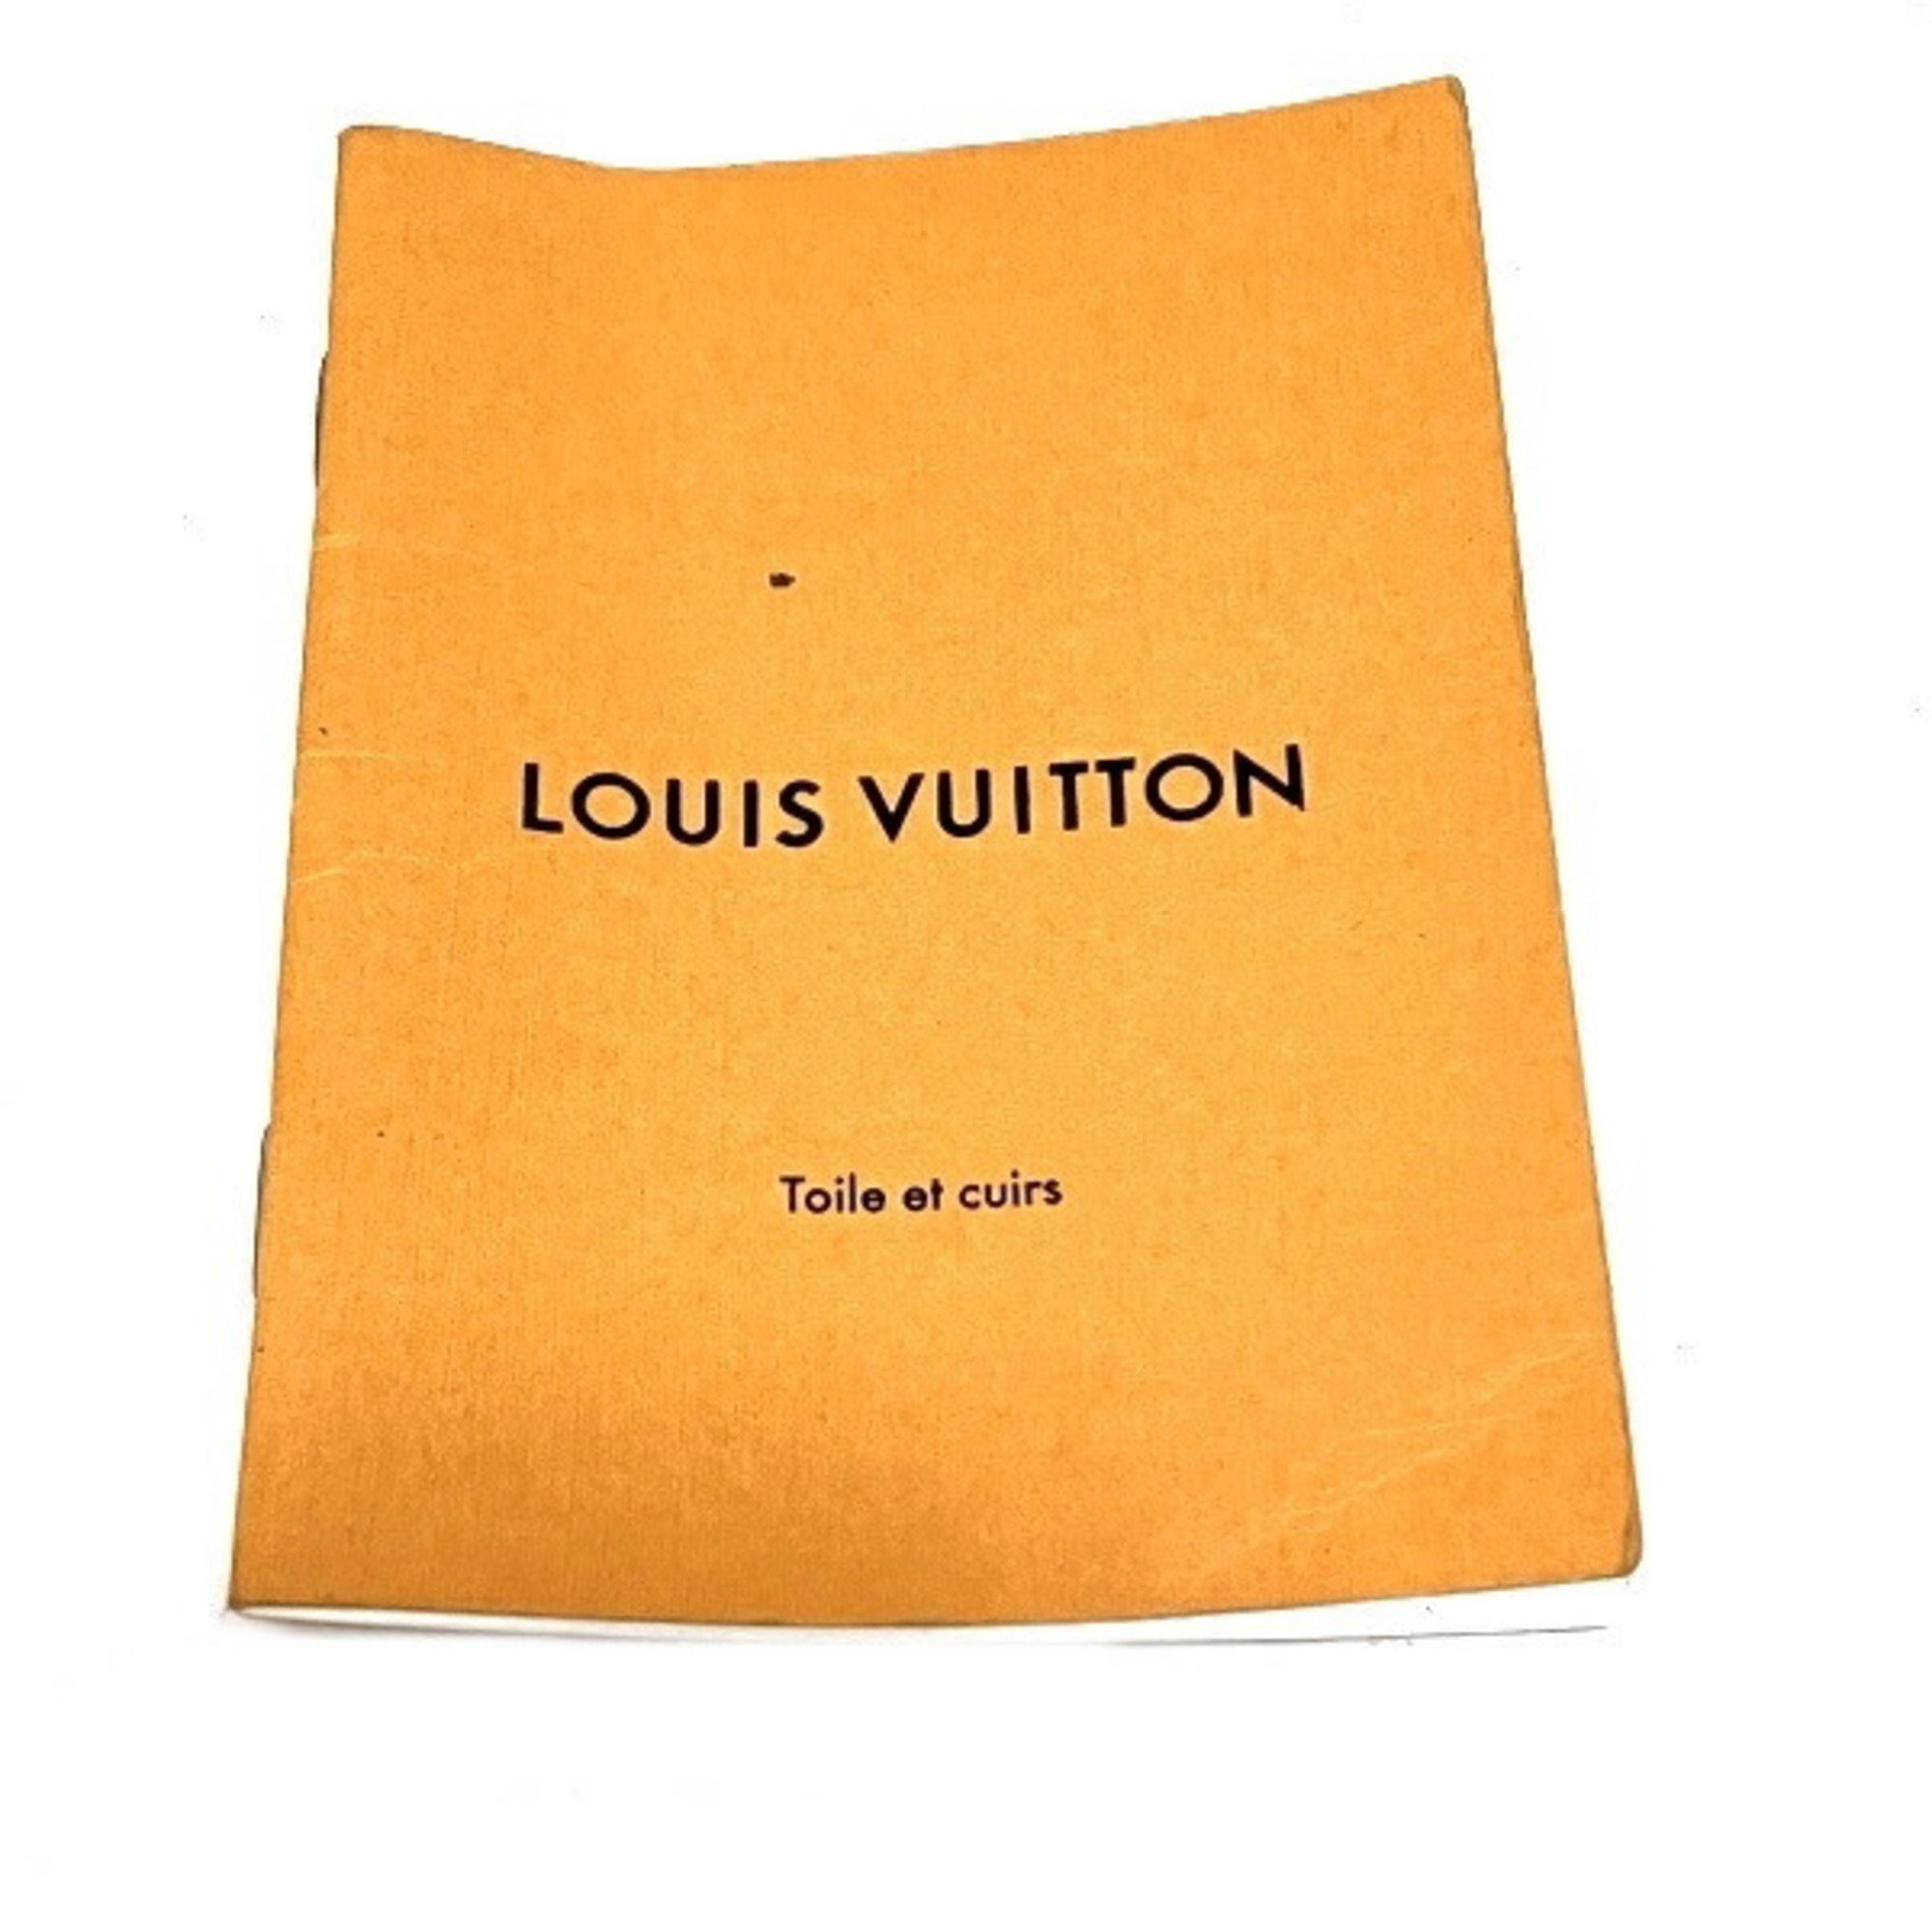 Louis Vuitton Damier Neverfull MM N41358 Bag Shoulder Tote Women's